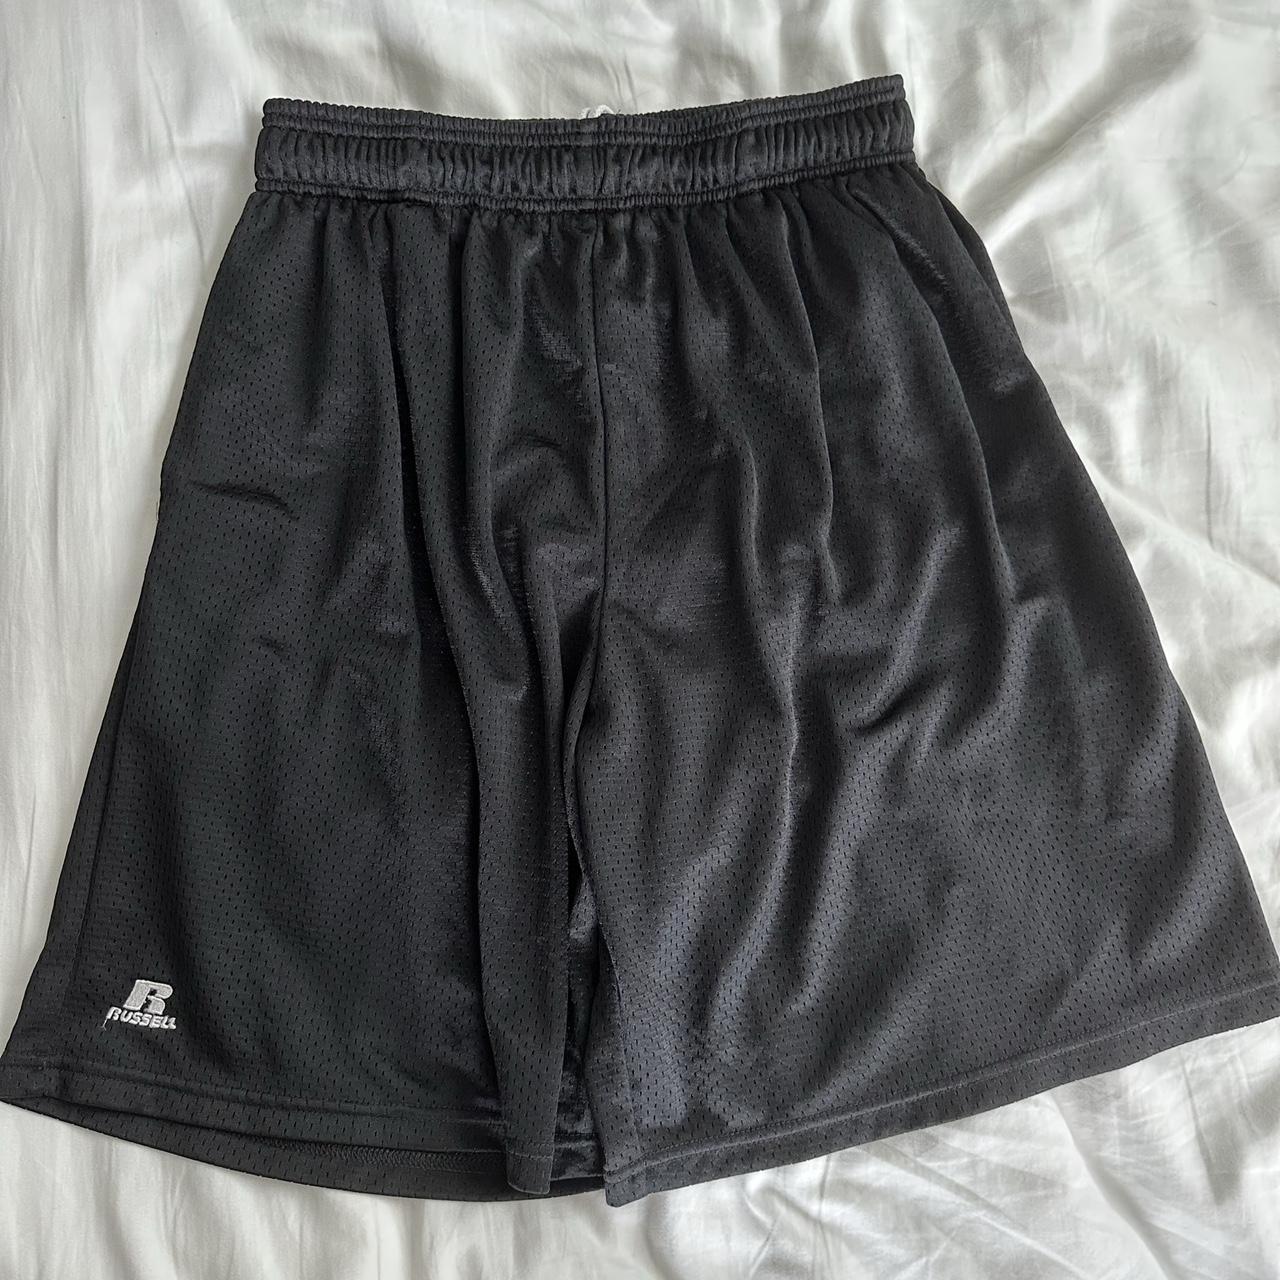 Russel Athletic Men’s Shorts Medium 10/10 condition - Depop